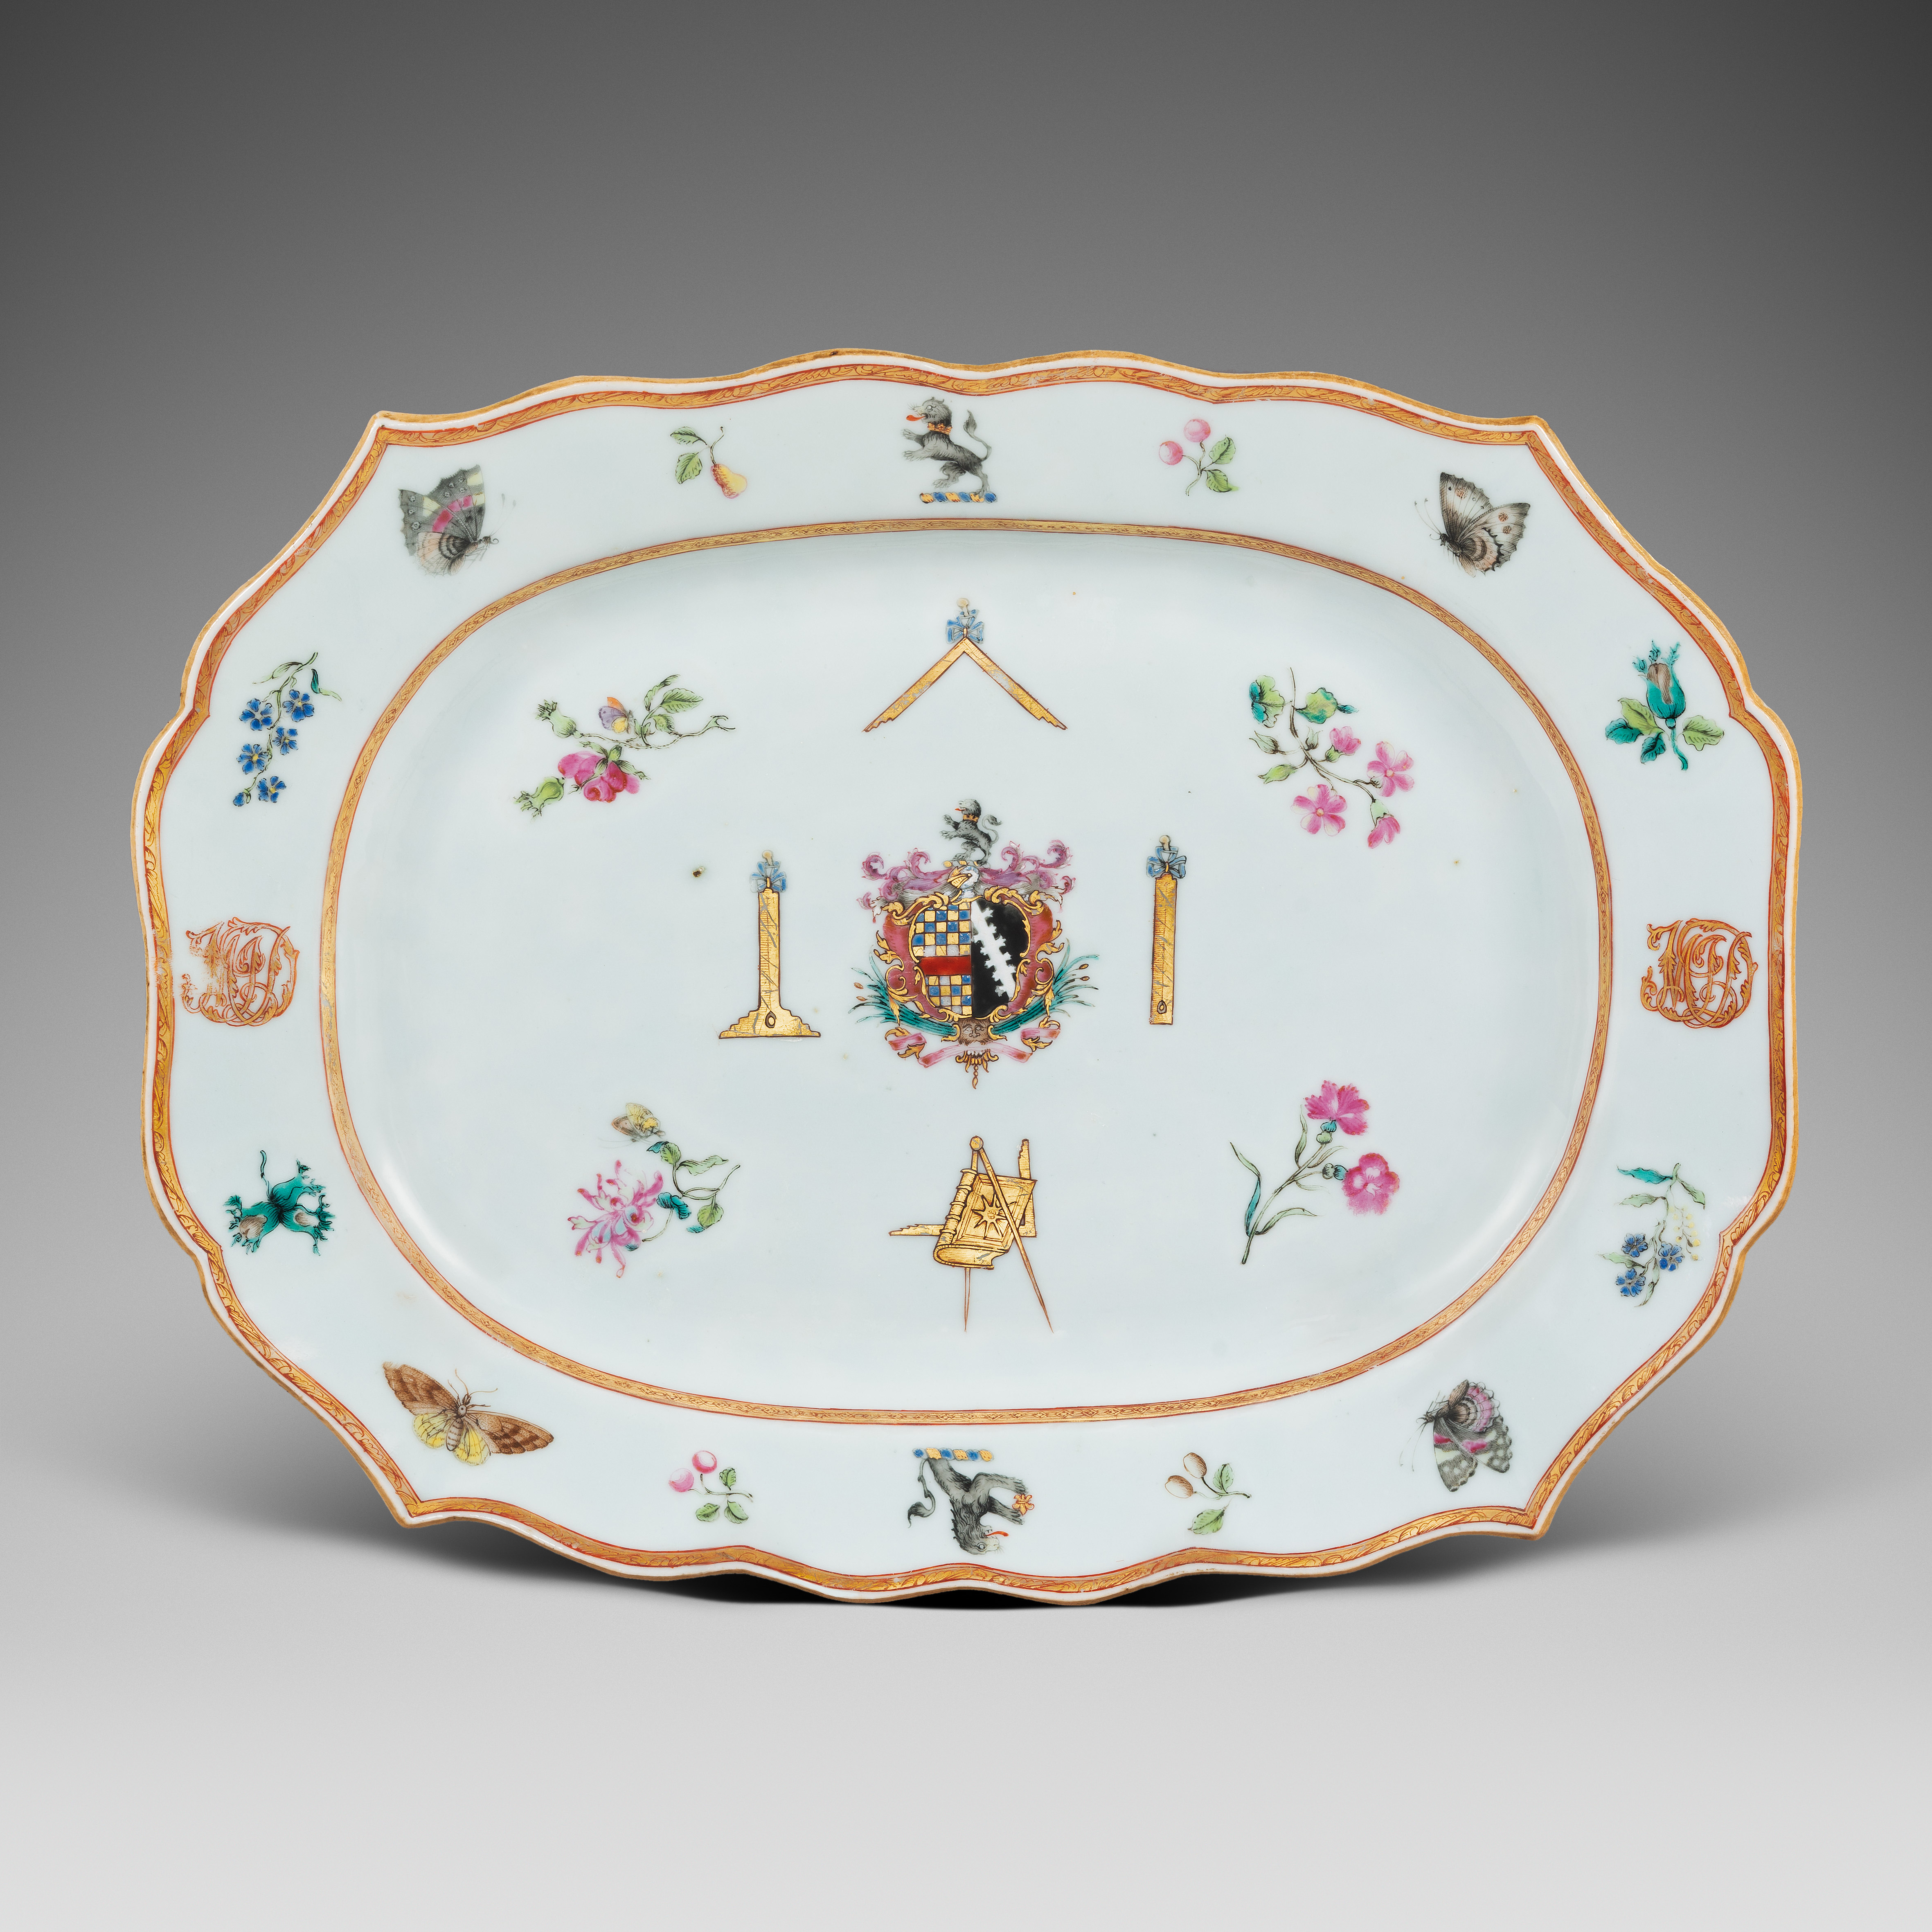 Porcelaine Qianlong (1736-1795), circa 1780, Chine